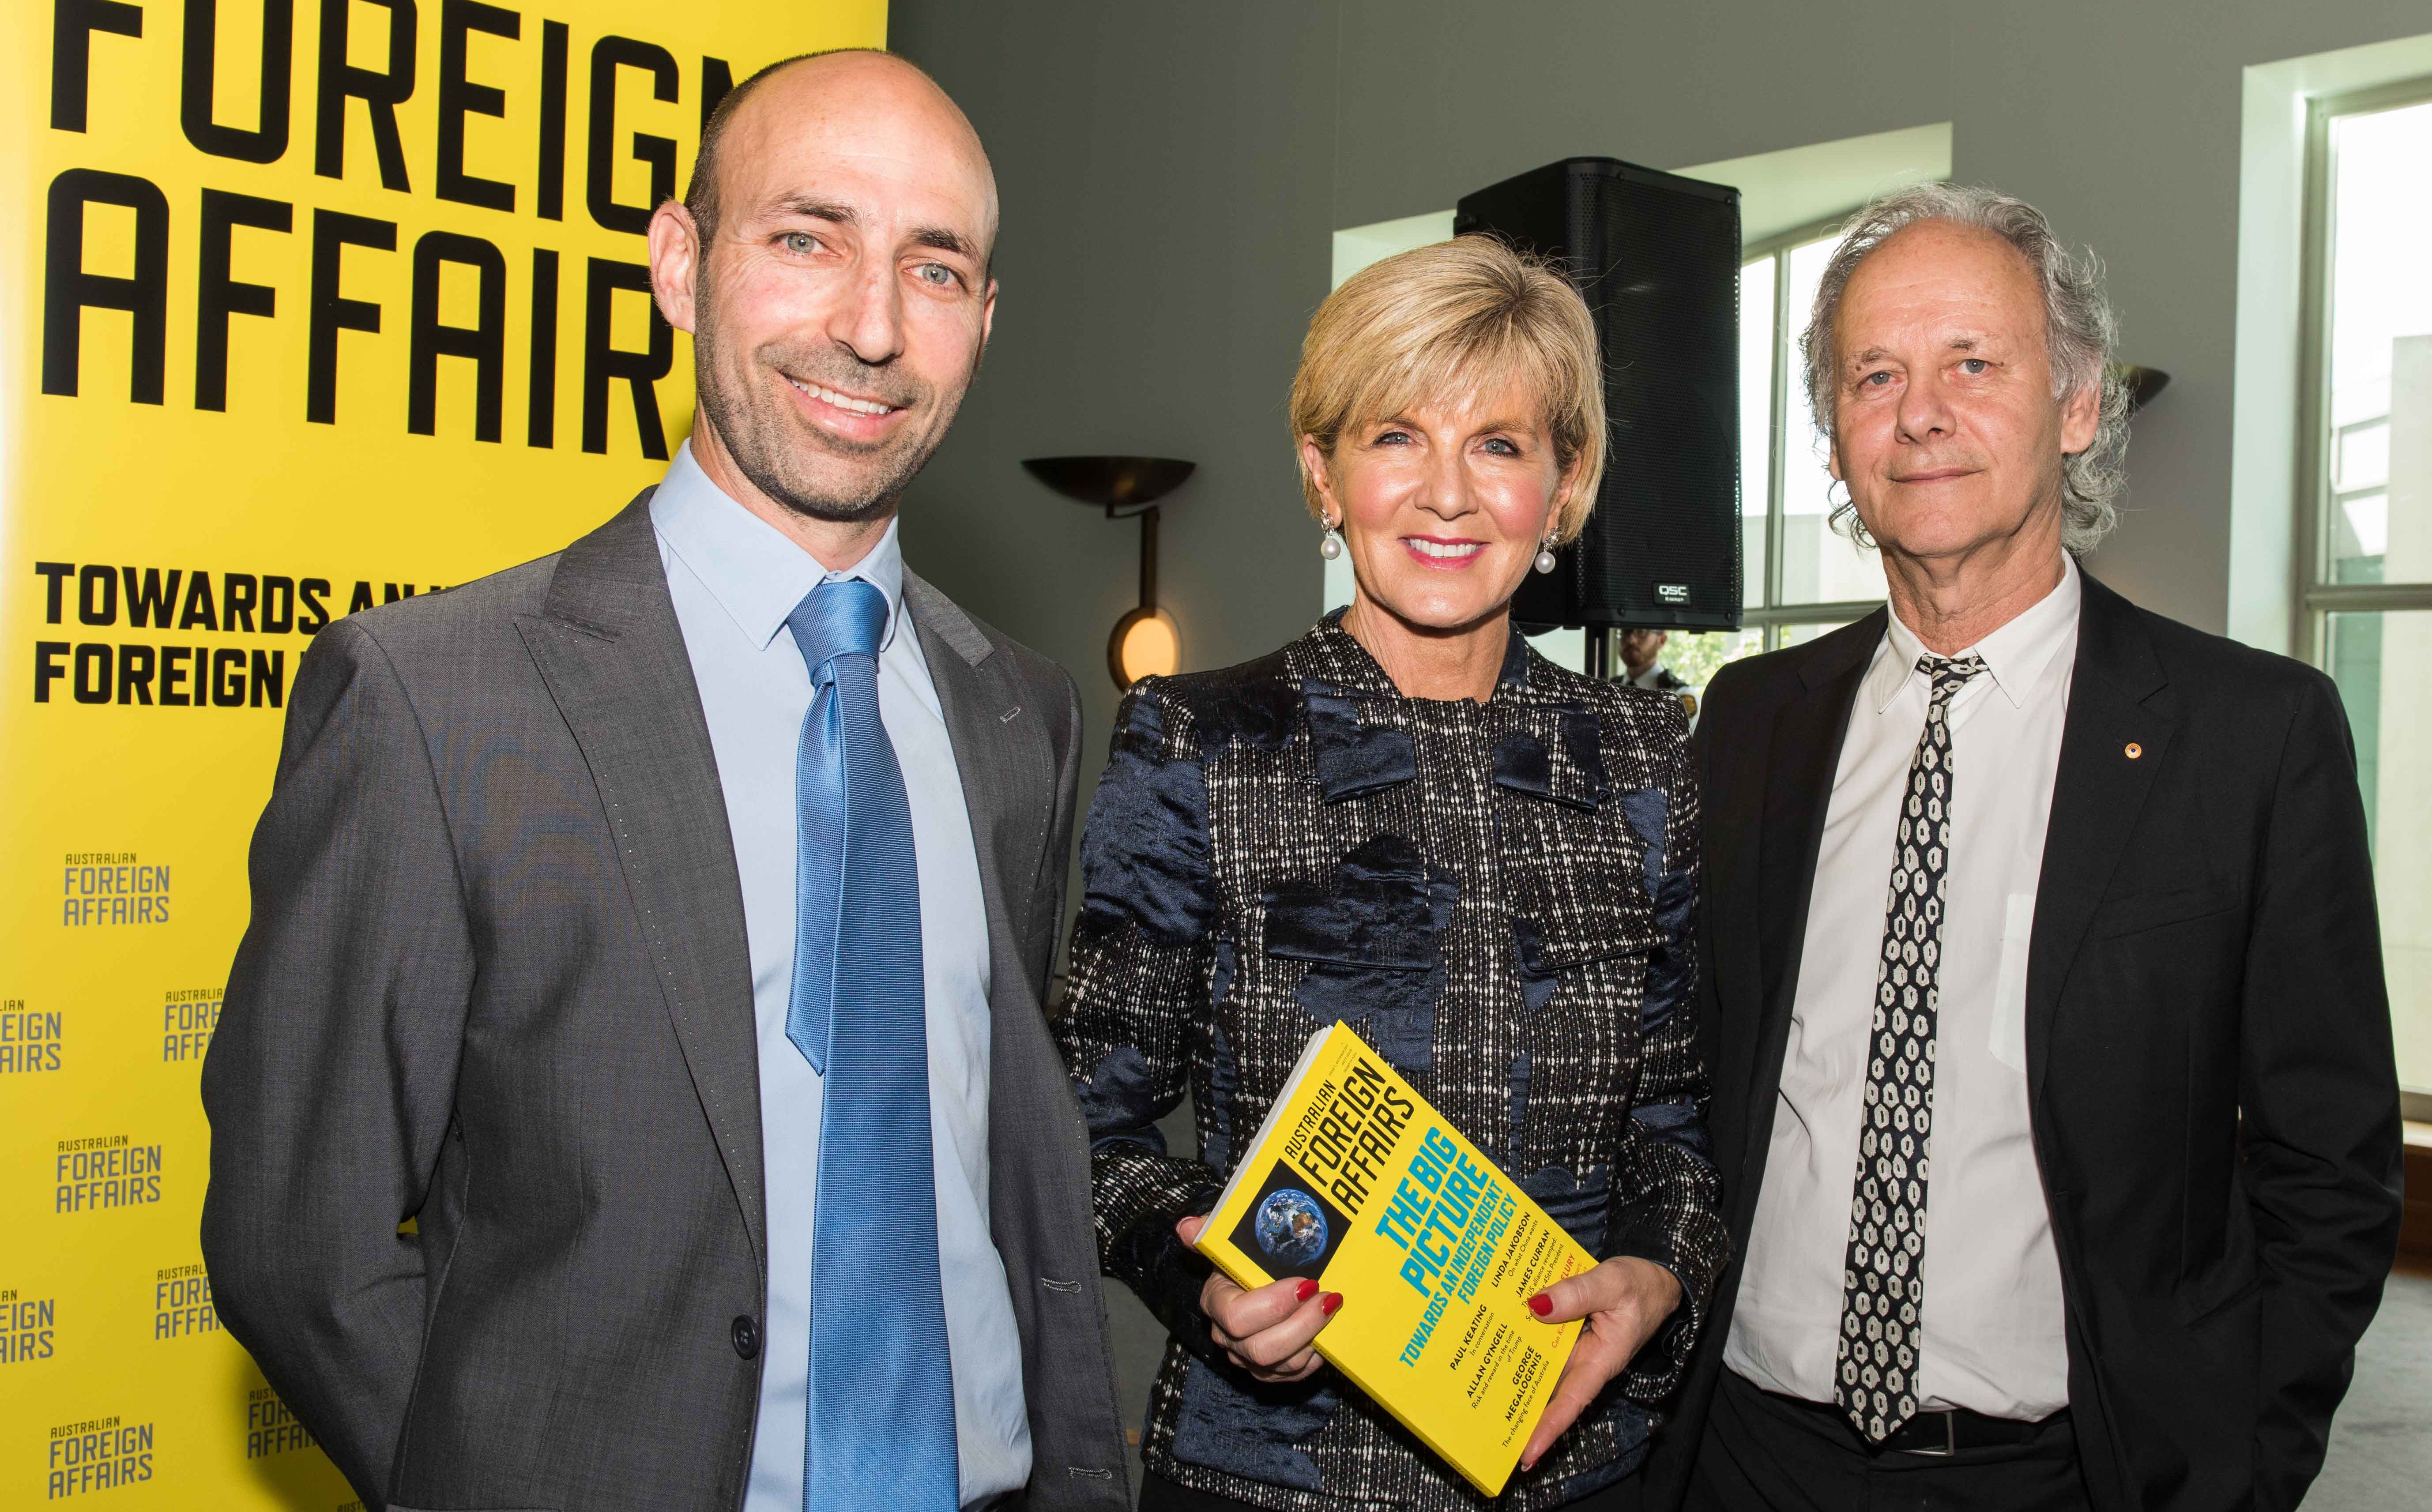 The Hon Julie Bishop MP launches Australian Foreign Affairs